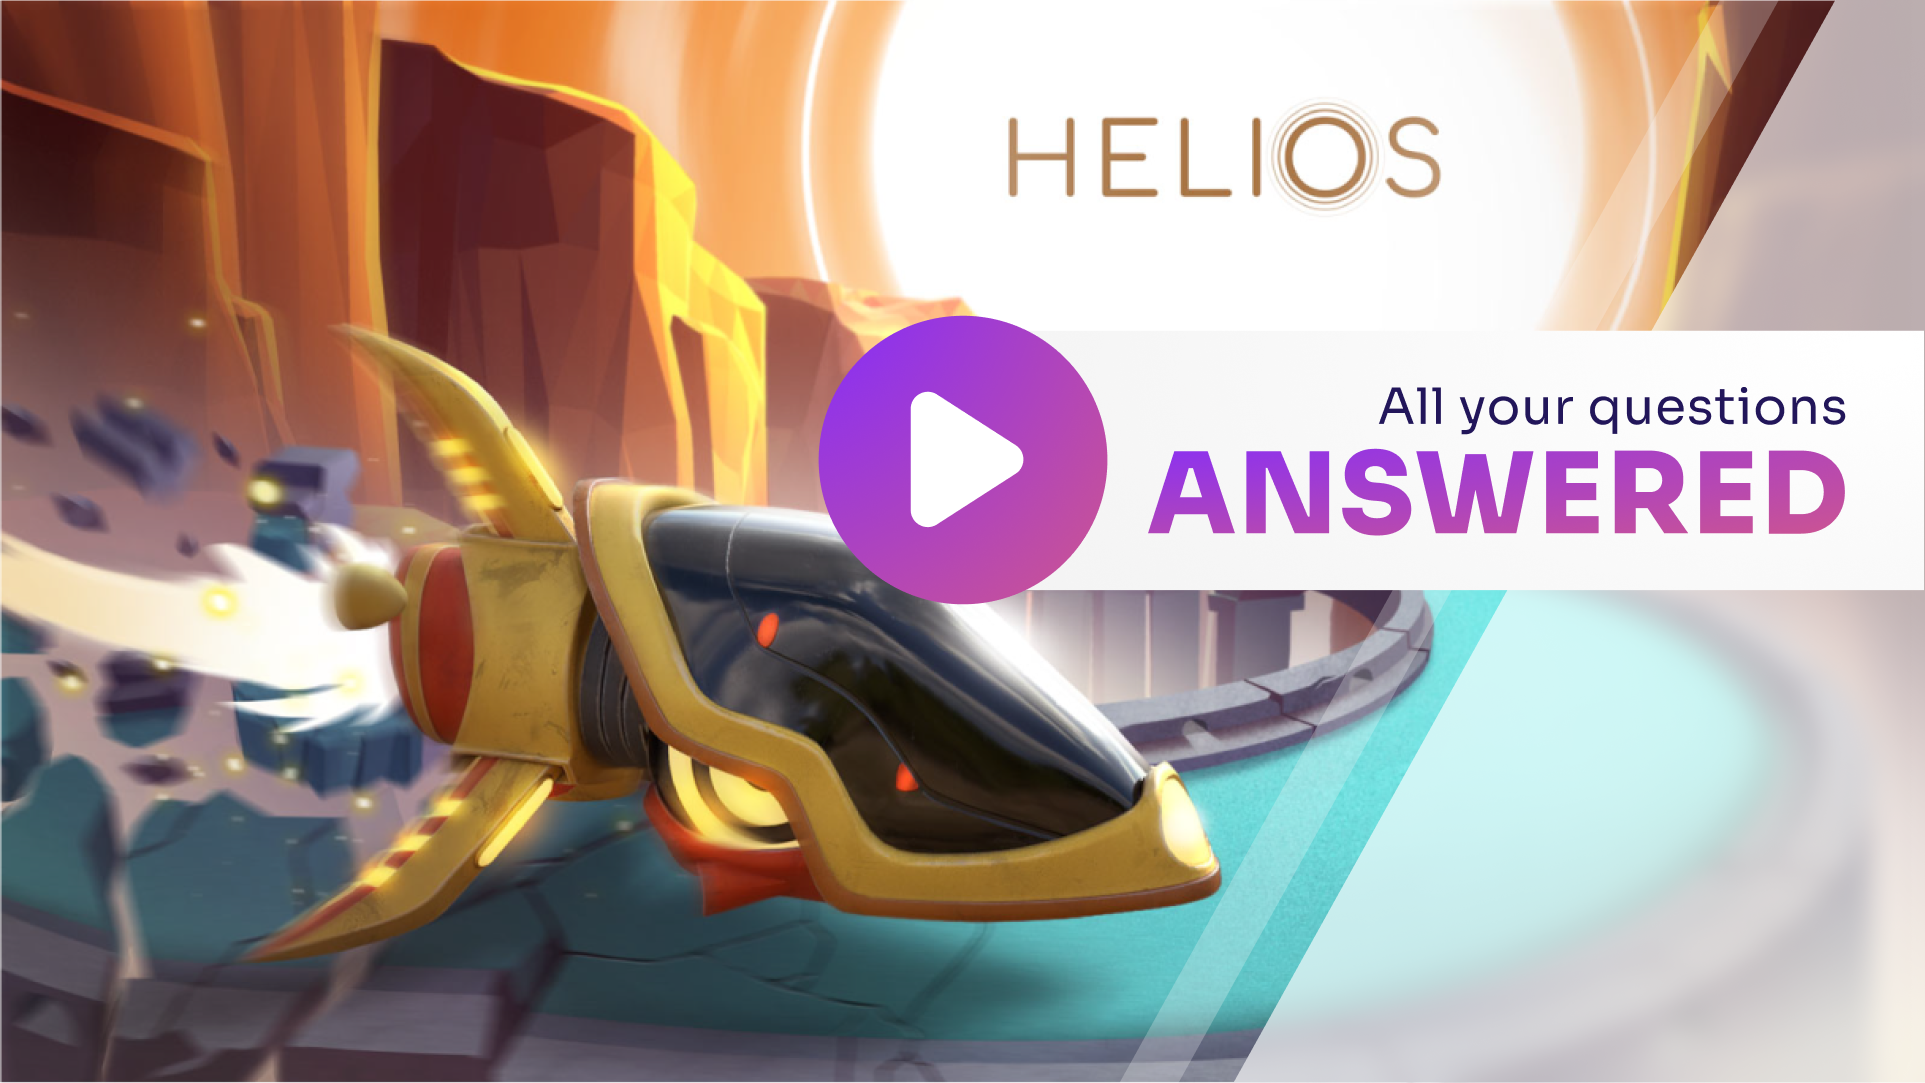 FAQ about Helios